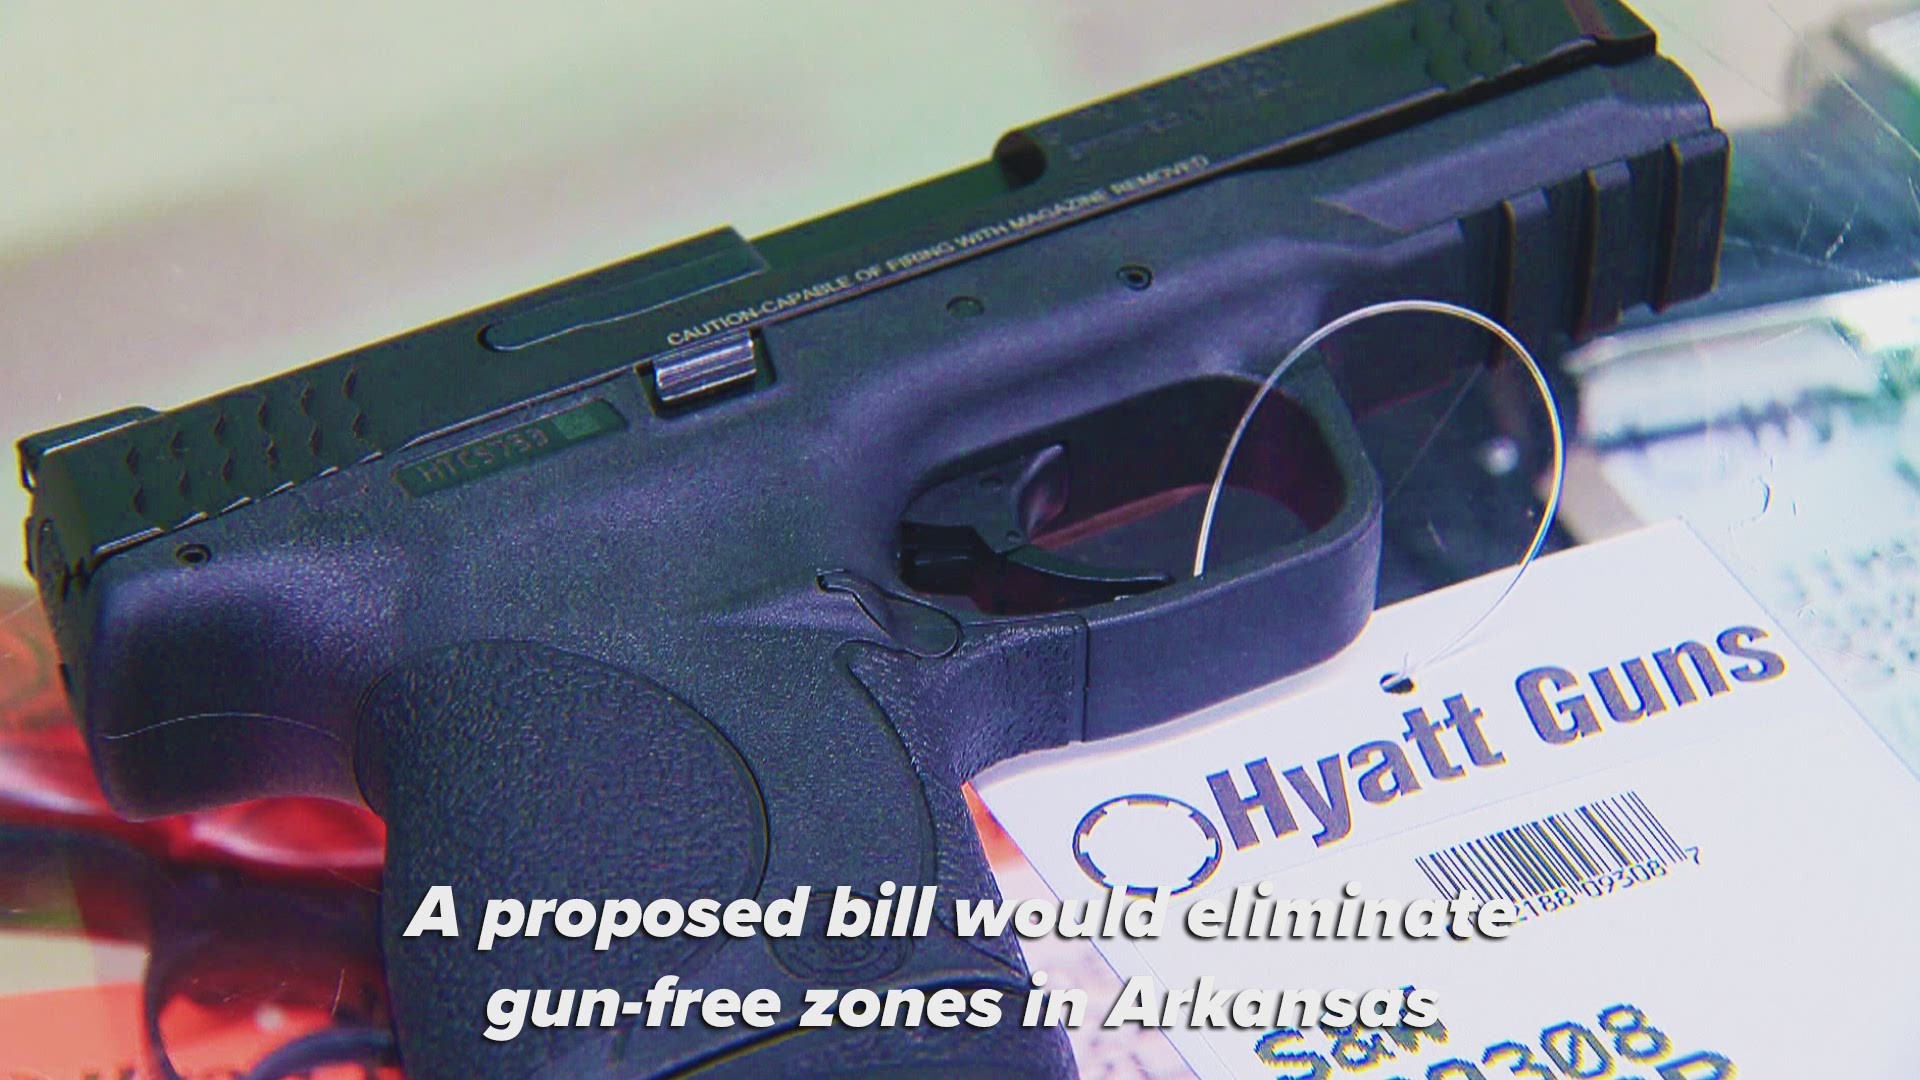 Rep. Richard Womack has filed legislation that would eliminate gun-free zones in Arkansas.